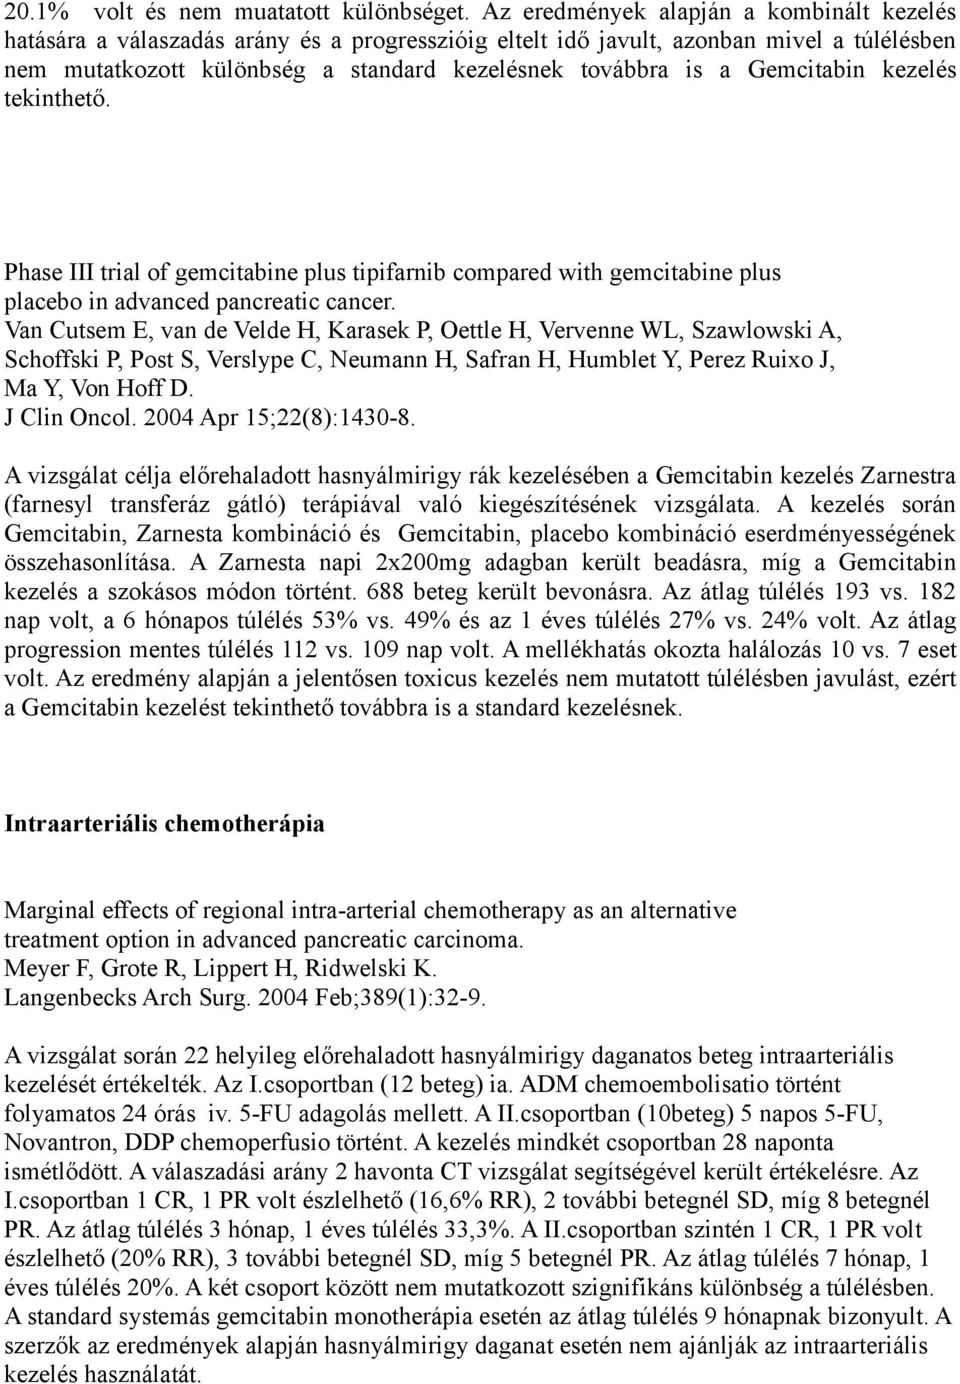 Gemcitabin kezelés tekinthető. Phase III trial of gemcitabine plus tipifarnib compared with gemcitabine plus placebo in advanced pancreatic cancer.